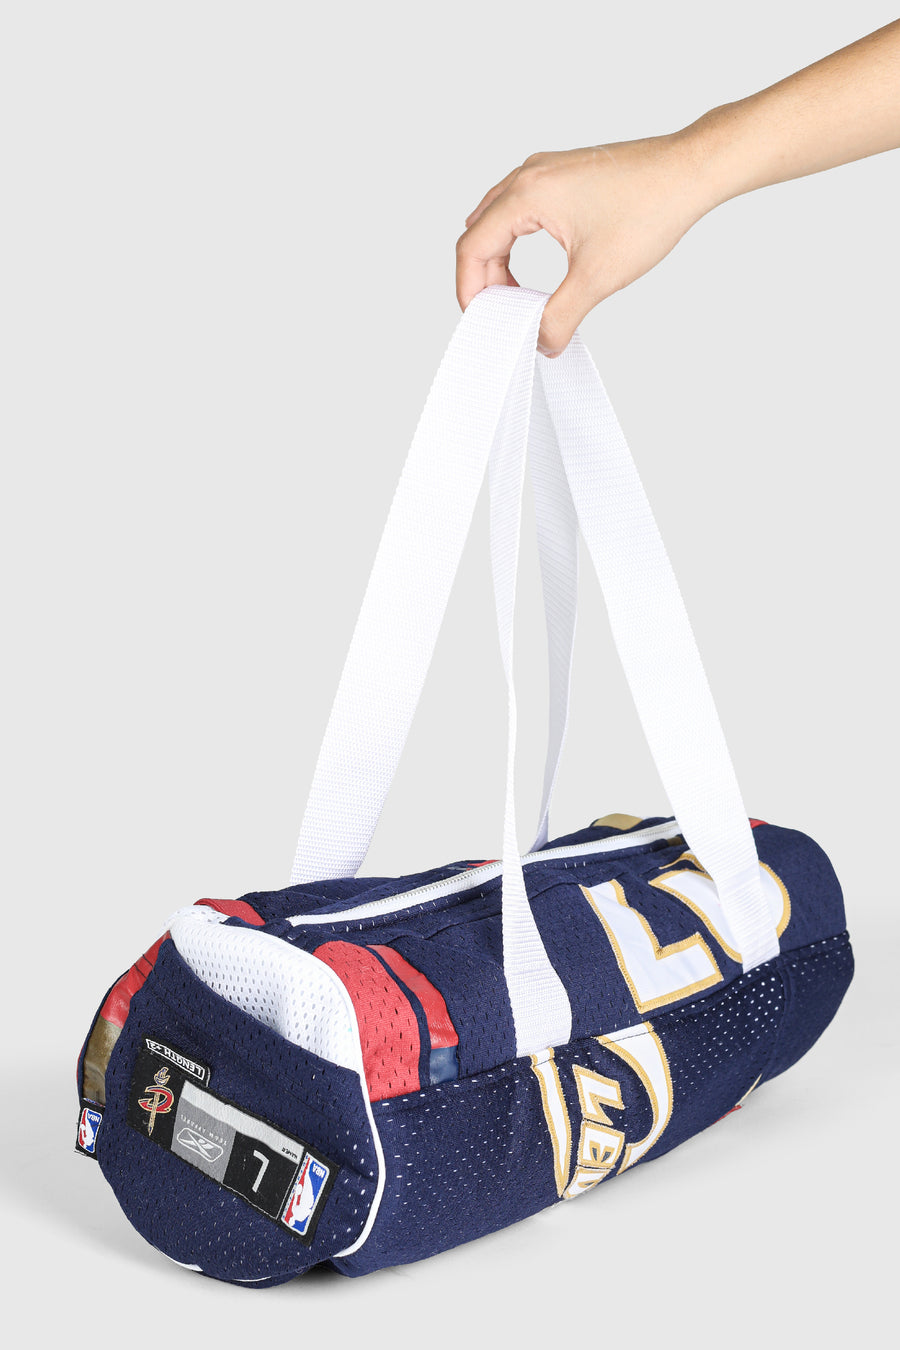 Rework Cavaliers NBA Duffle Bag